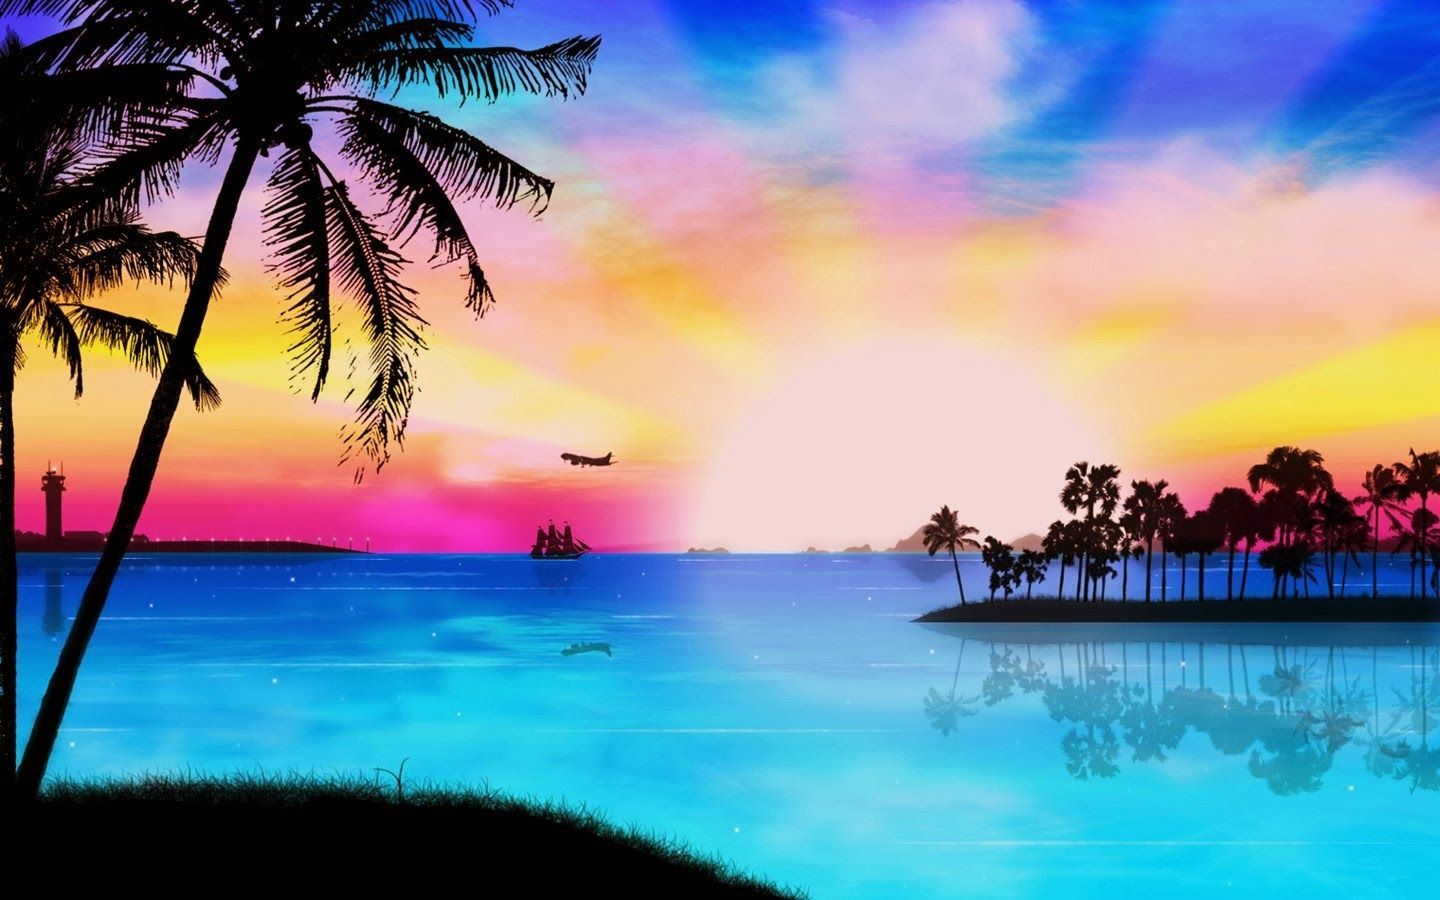 Tropical paradise. Tropical paradise wallpaper, Tropical islands